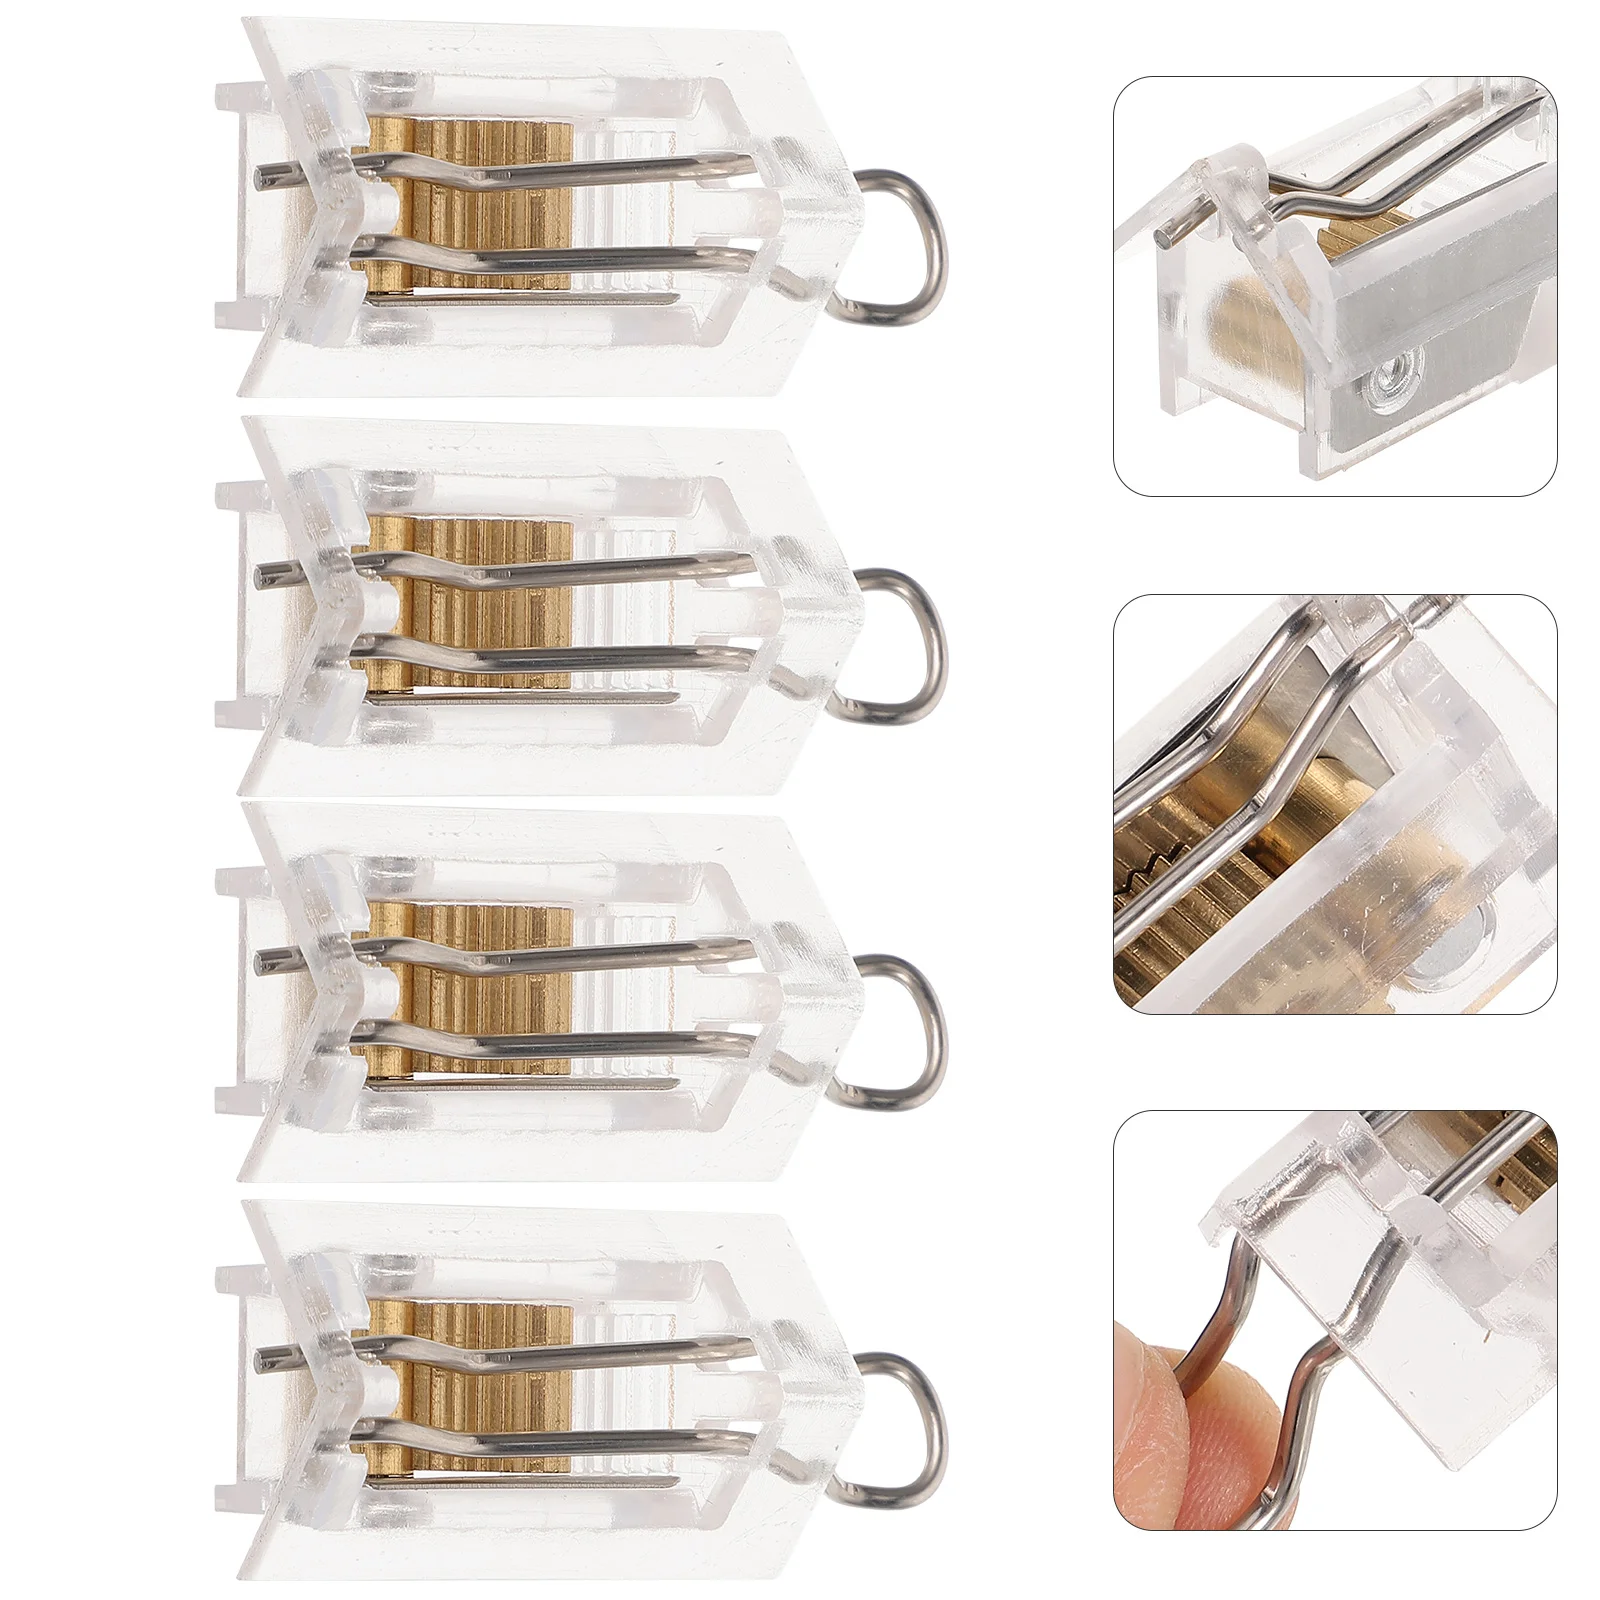 

4pcs Cord Lock Blind Wire Locks and Tilt Mechanism Venetian Blind Parts Window Blinds Components